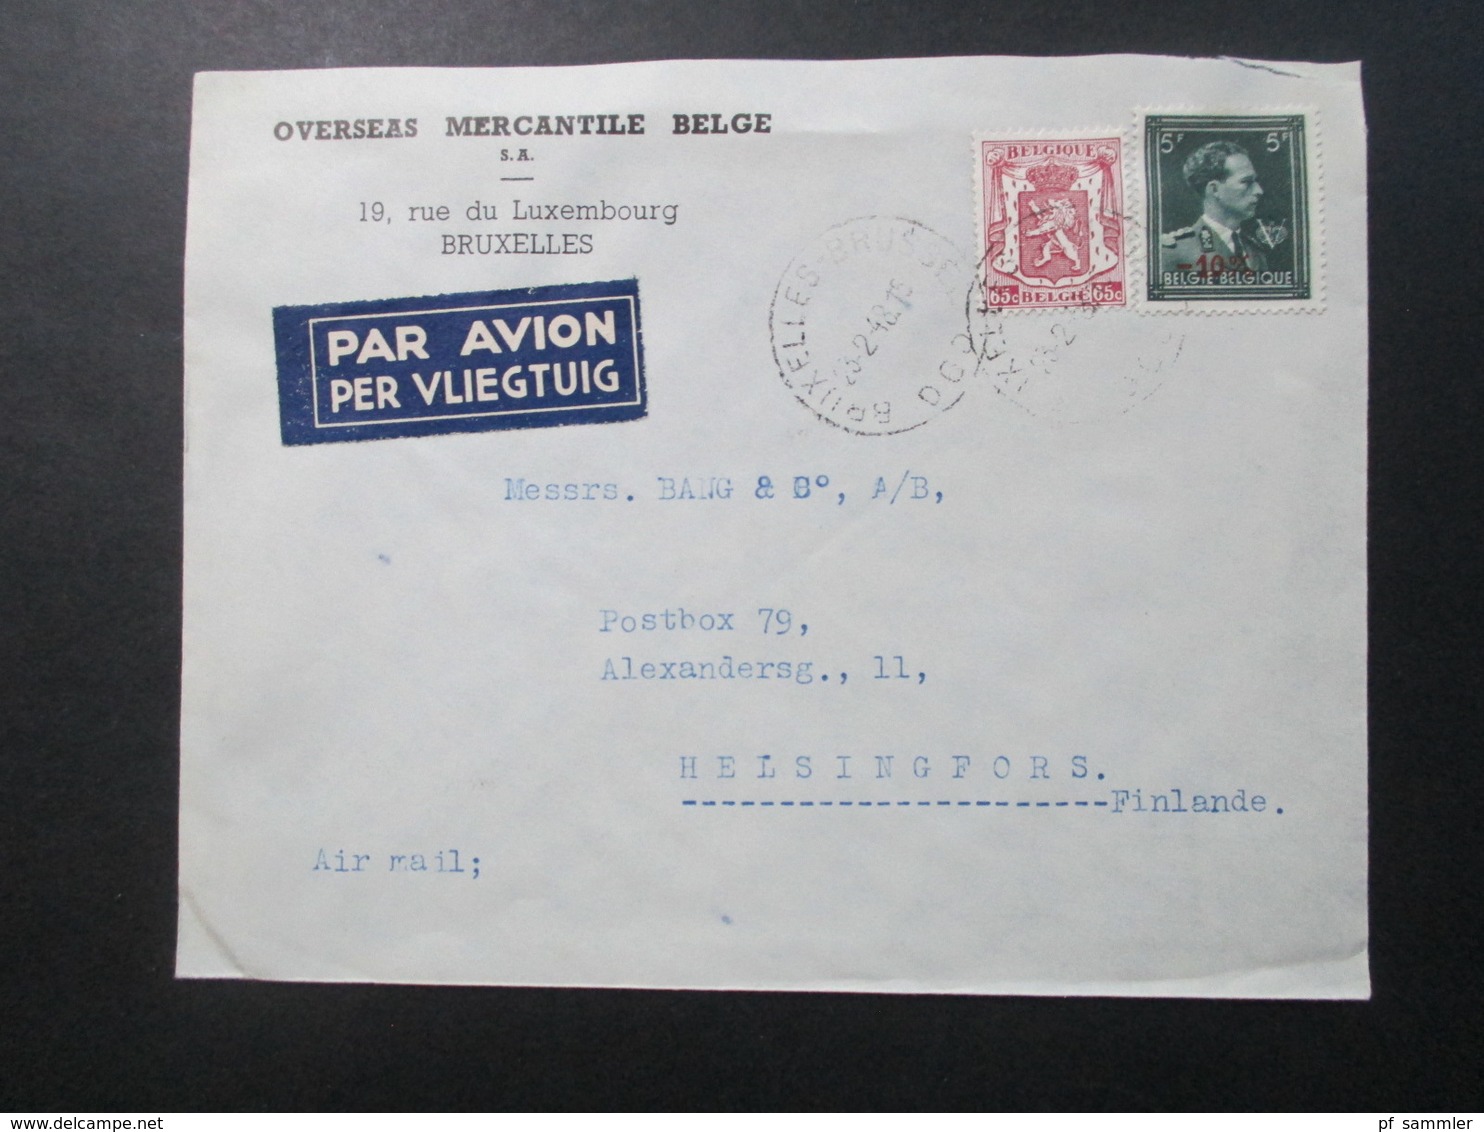 Belgien 1946 Auslandsbrief Nach Finnland Mit Nr. 750 MiF Luftpost Overseas Mercantile Belge Rue Du Luxembourg Bruxelles - 1946 -10 %